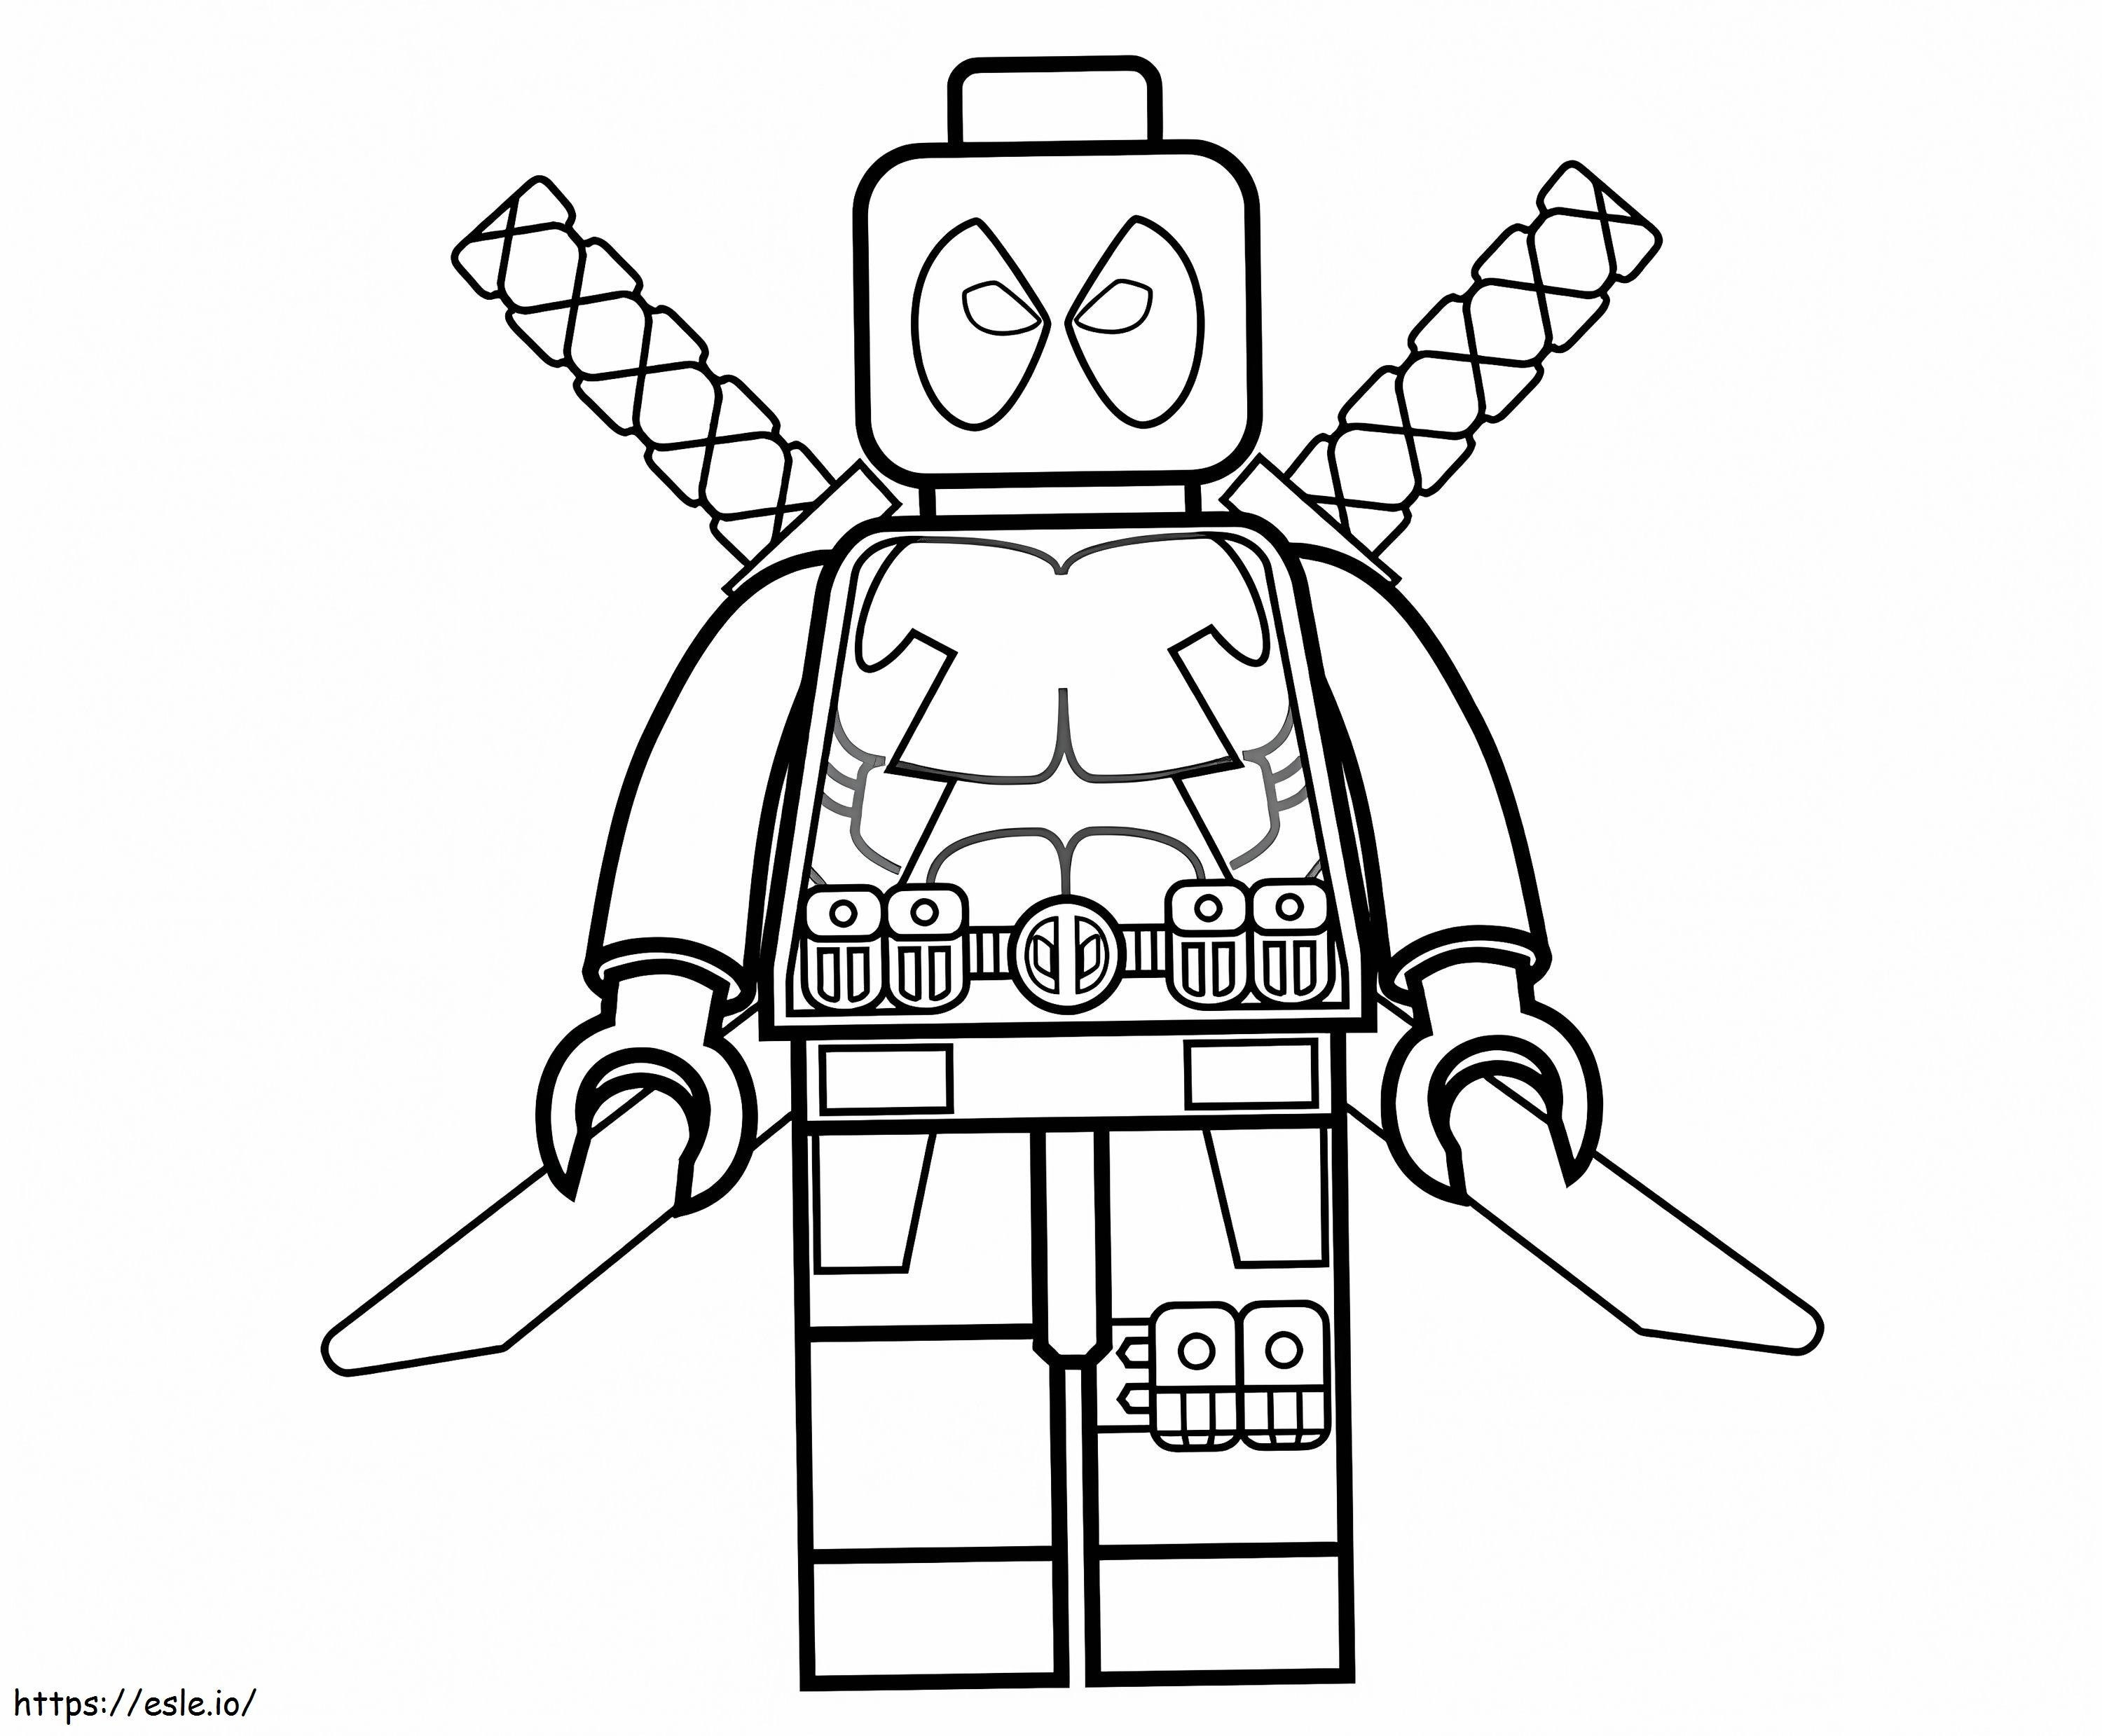 Fajny Deadpool z Lego kolorowanka